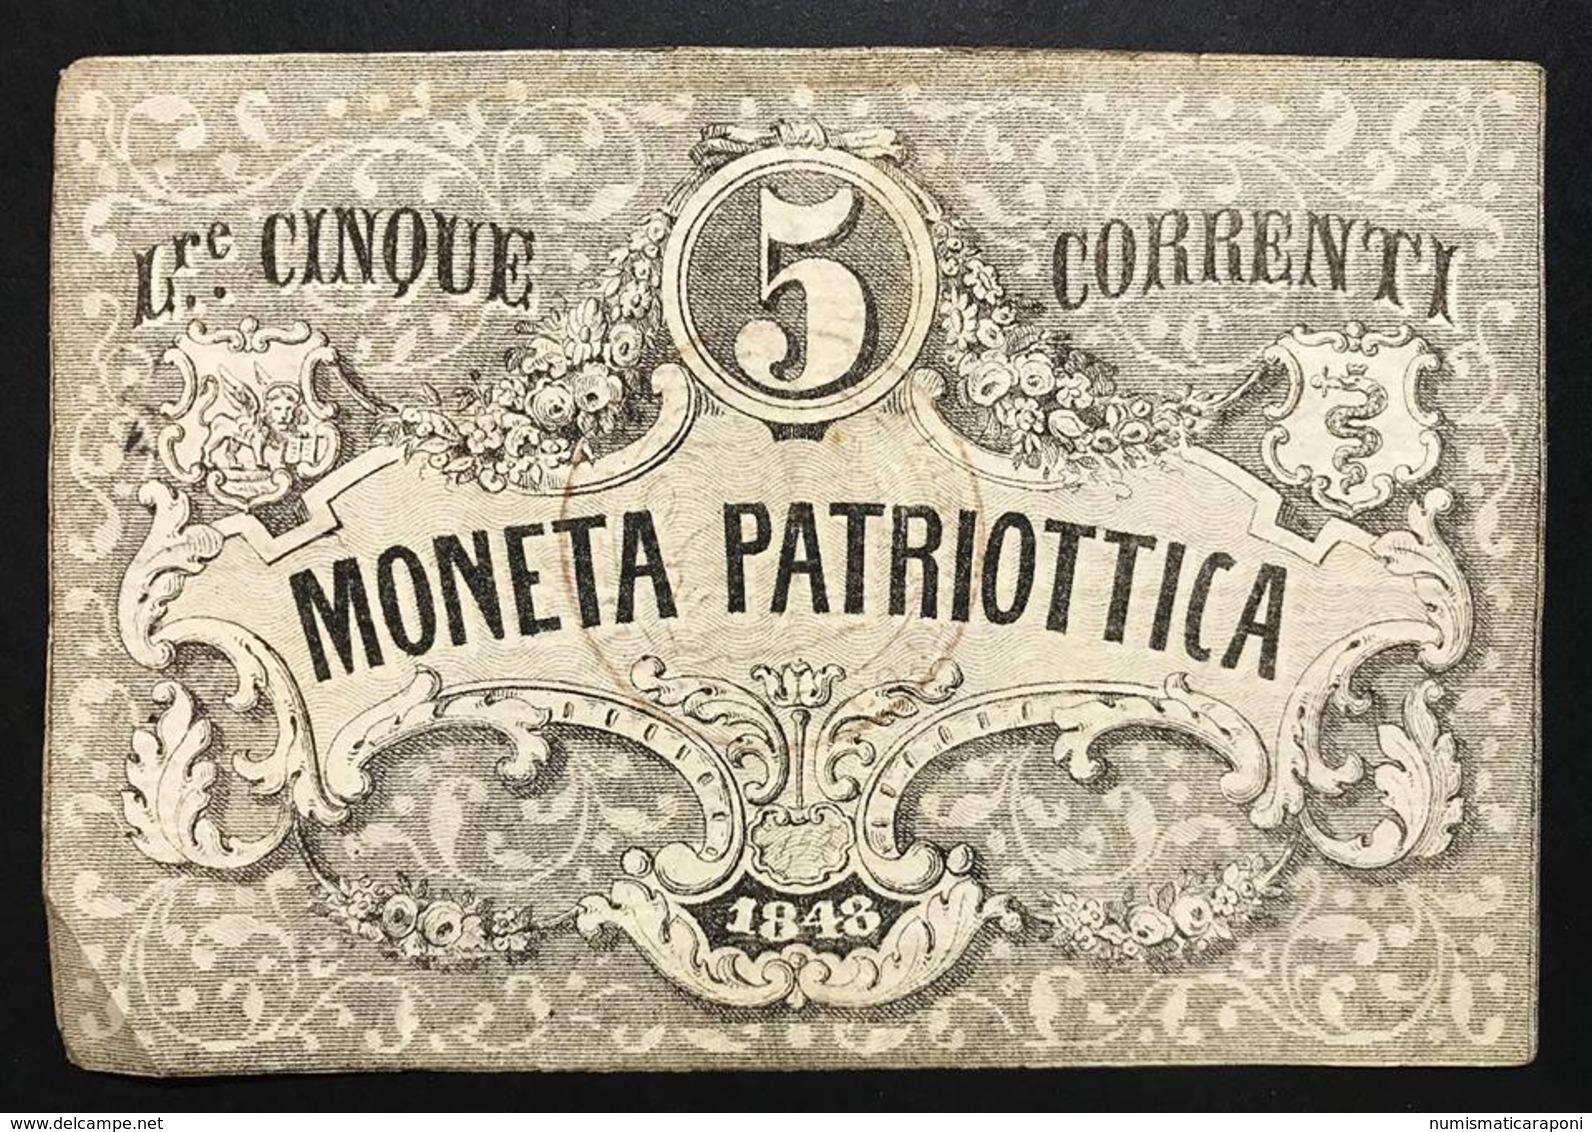 Venezia 5 Lire Moneta Patriottica 1848 Firma Barzilai  Forellino LOTTO 2032 - [ 4] Vorläufige Ausgaben